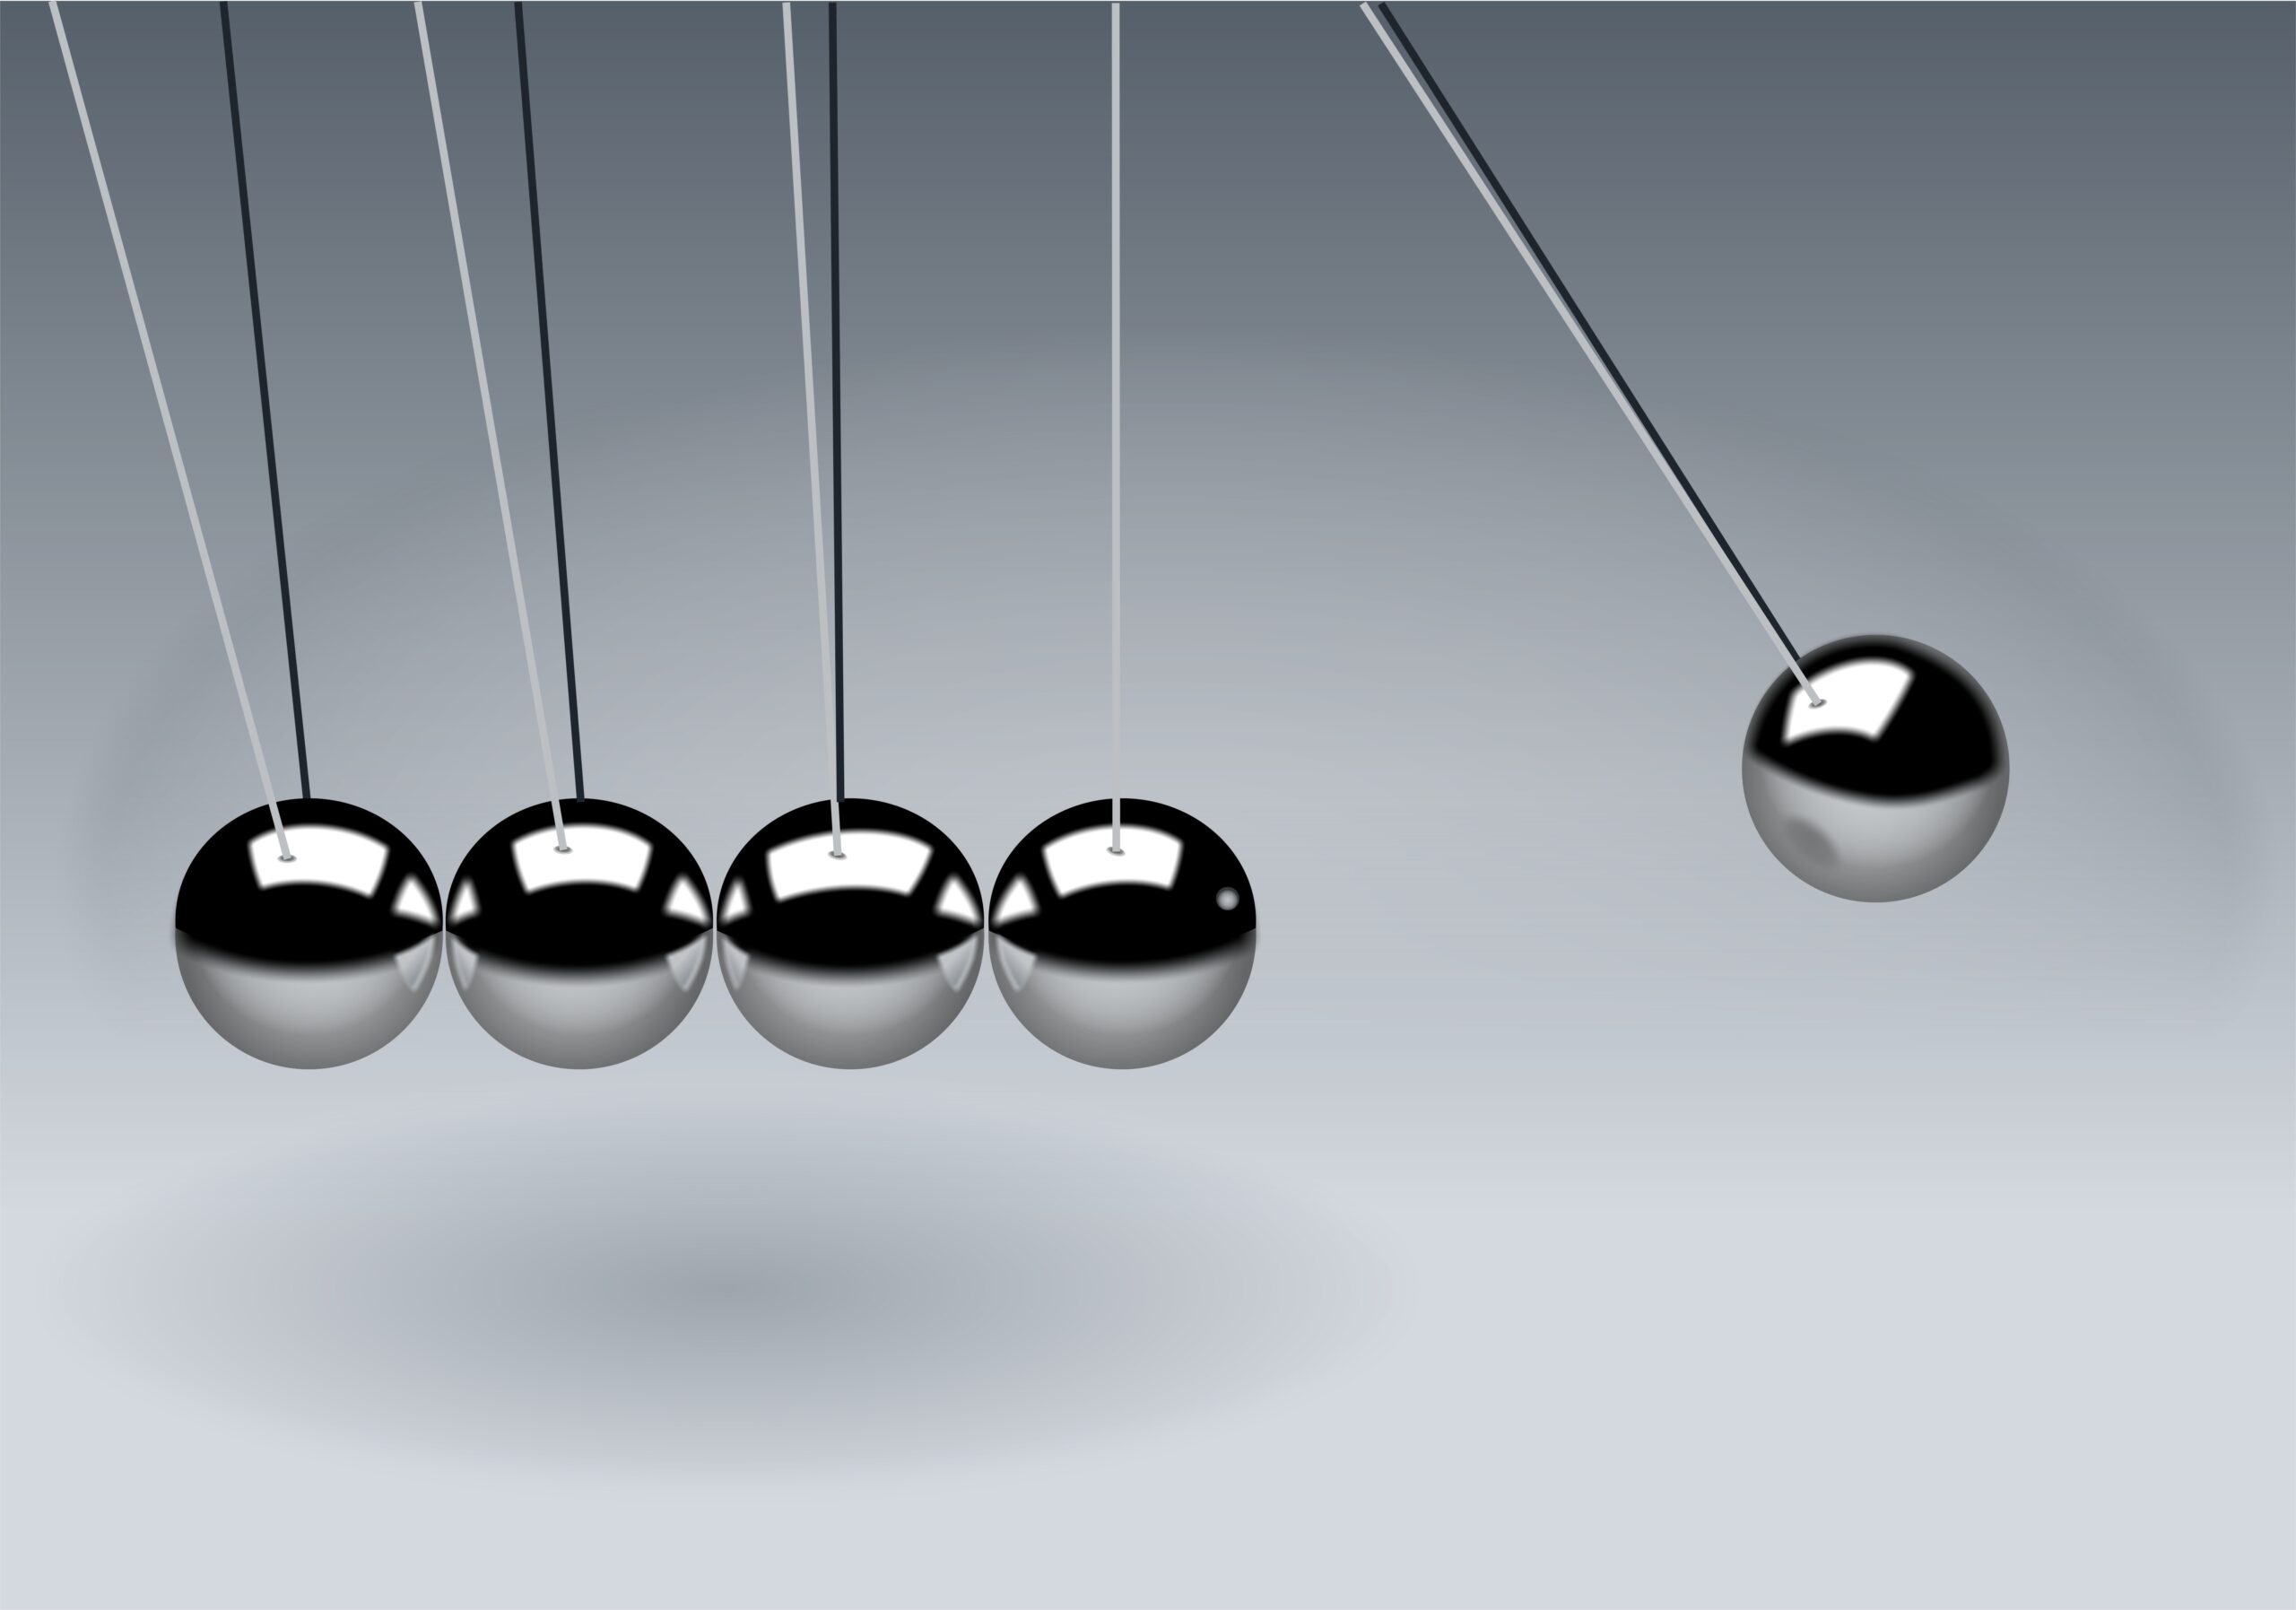 The simple pendulum (An example of Oscillatory Motion)